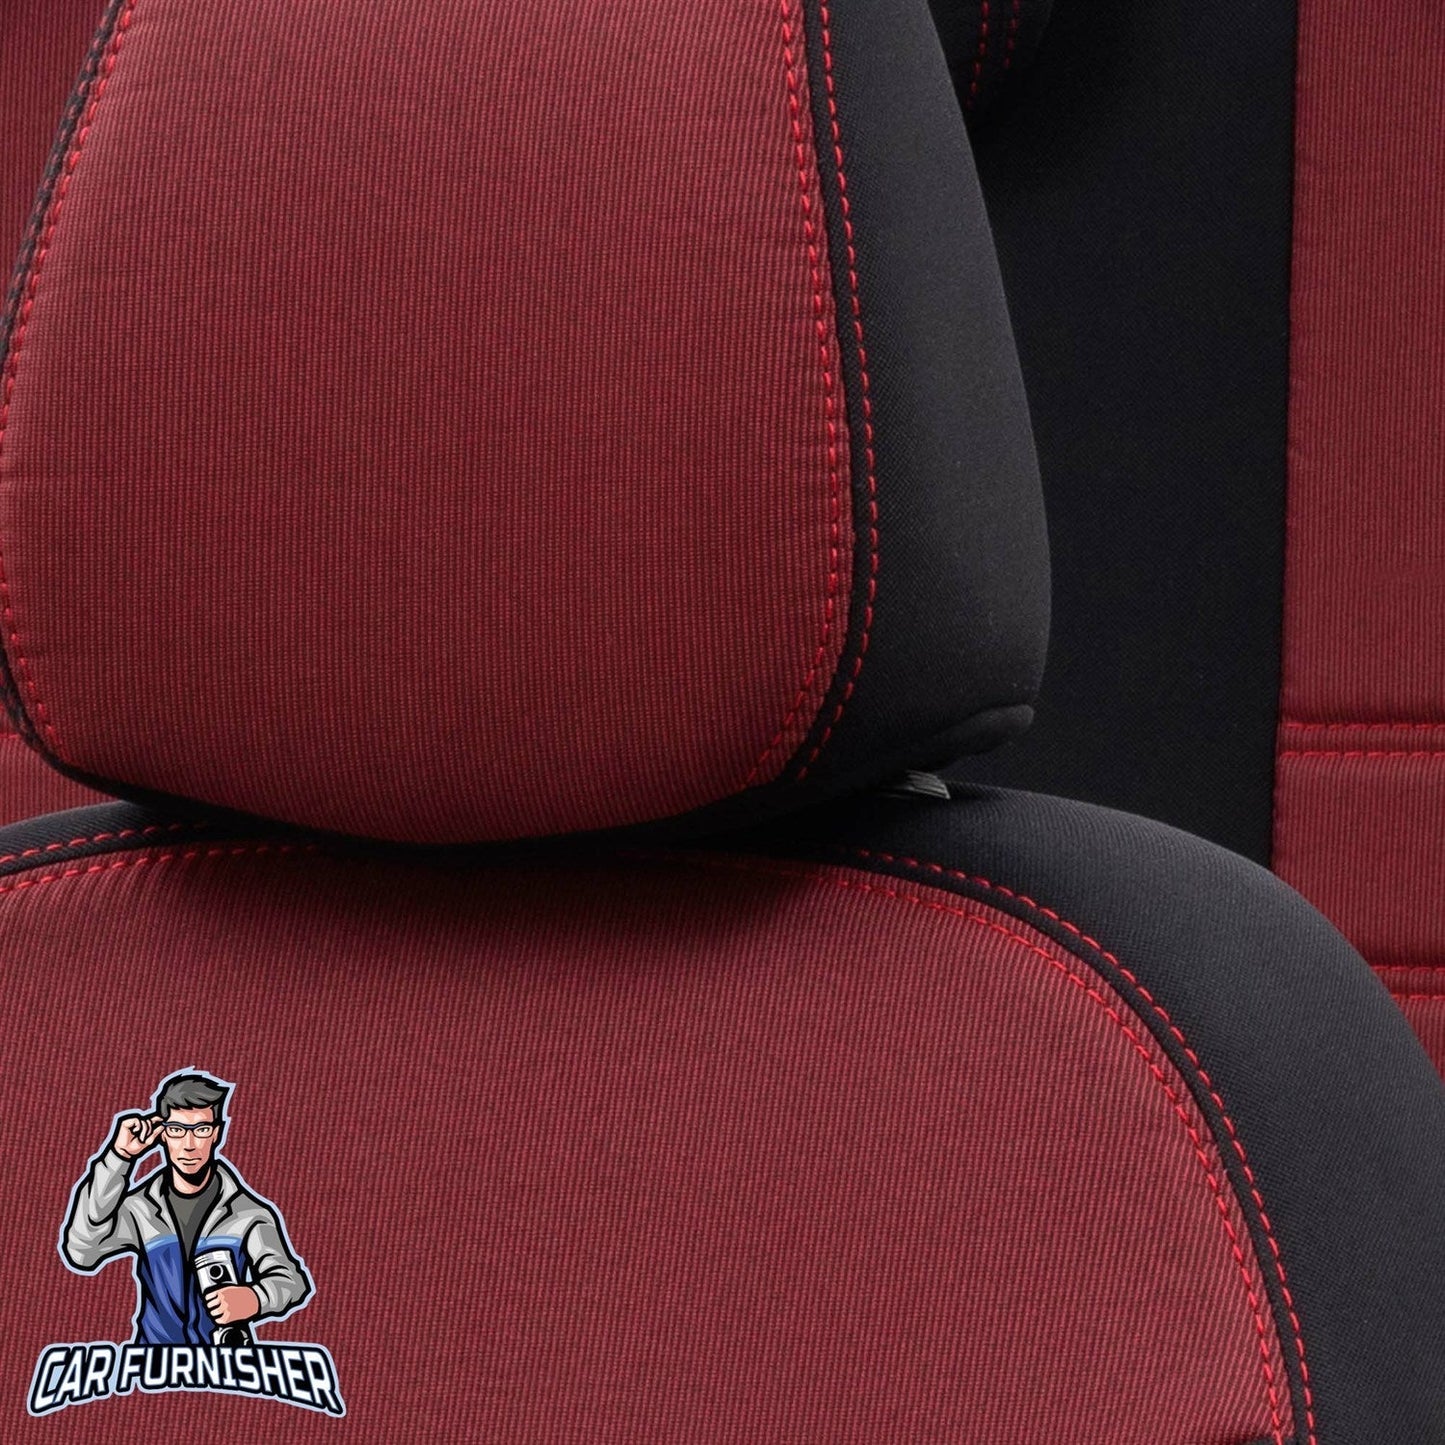 Fiat Fiorino Seat Covers Original Jacquard Design Red Jacquard Fabric